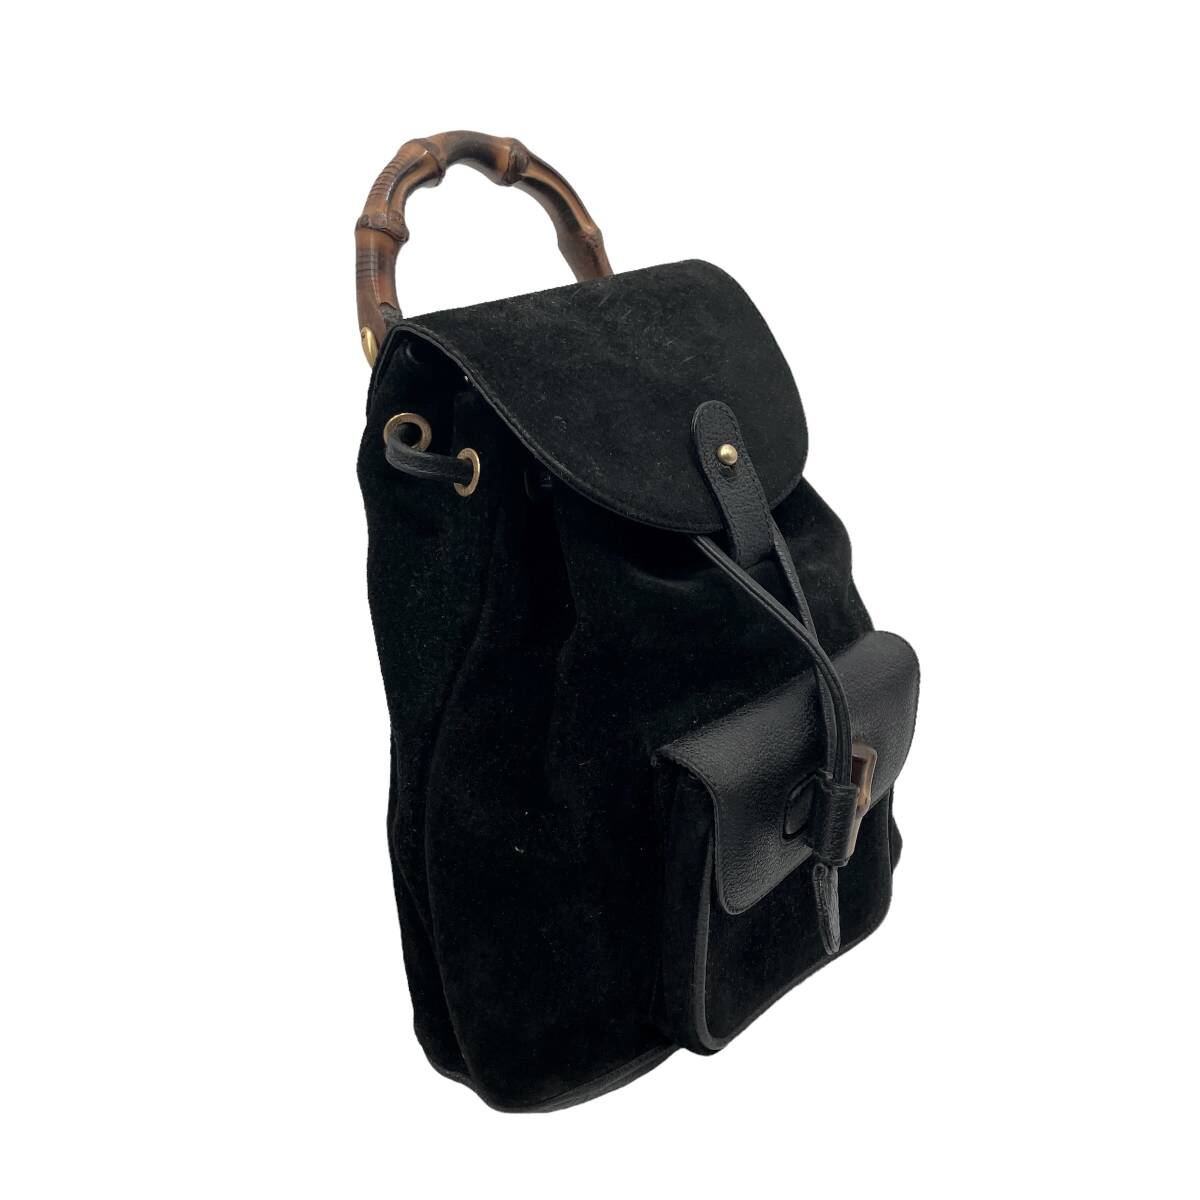  Gucci рюкзак замша черный чёрный bamboo кожа кожа рюкзак GUCCI брендовая сумка оттенок золота металлические принадлежности 